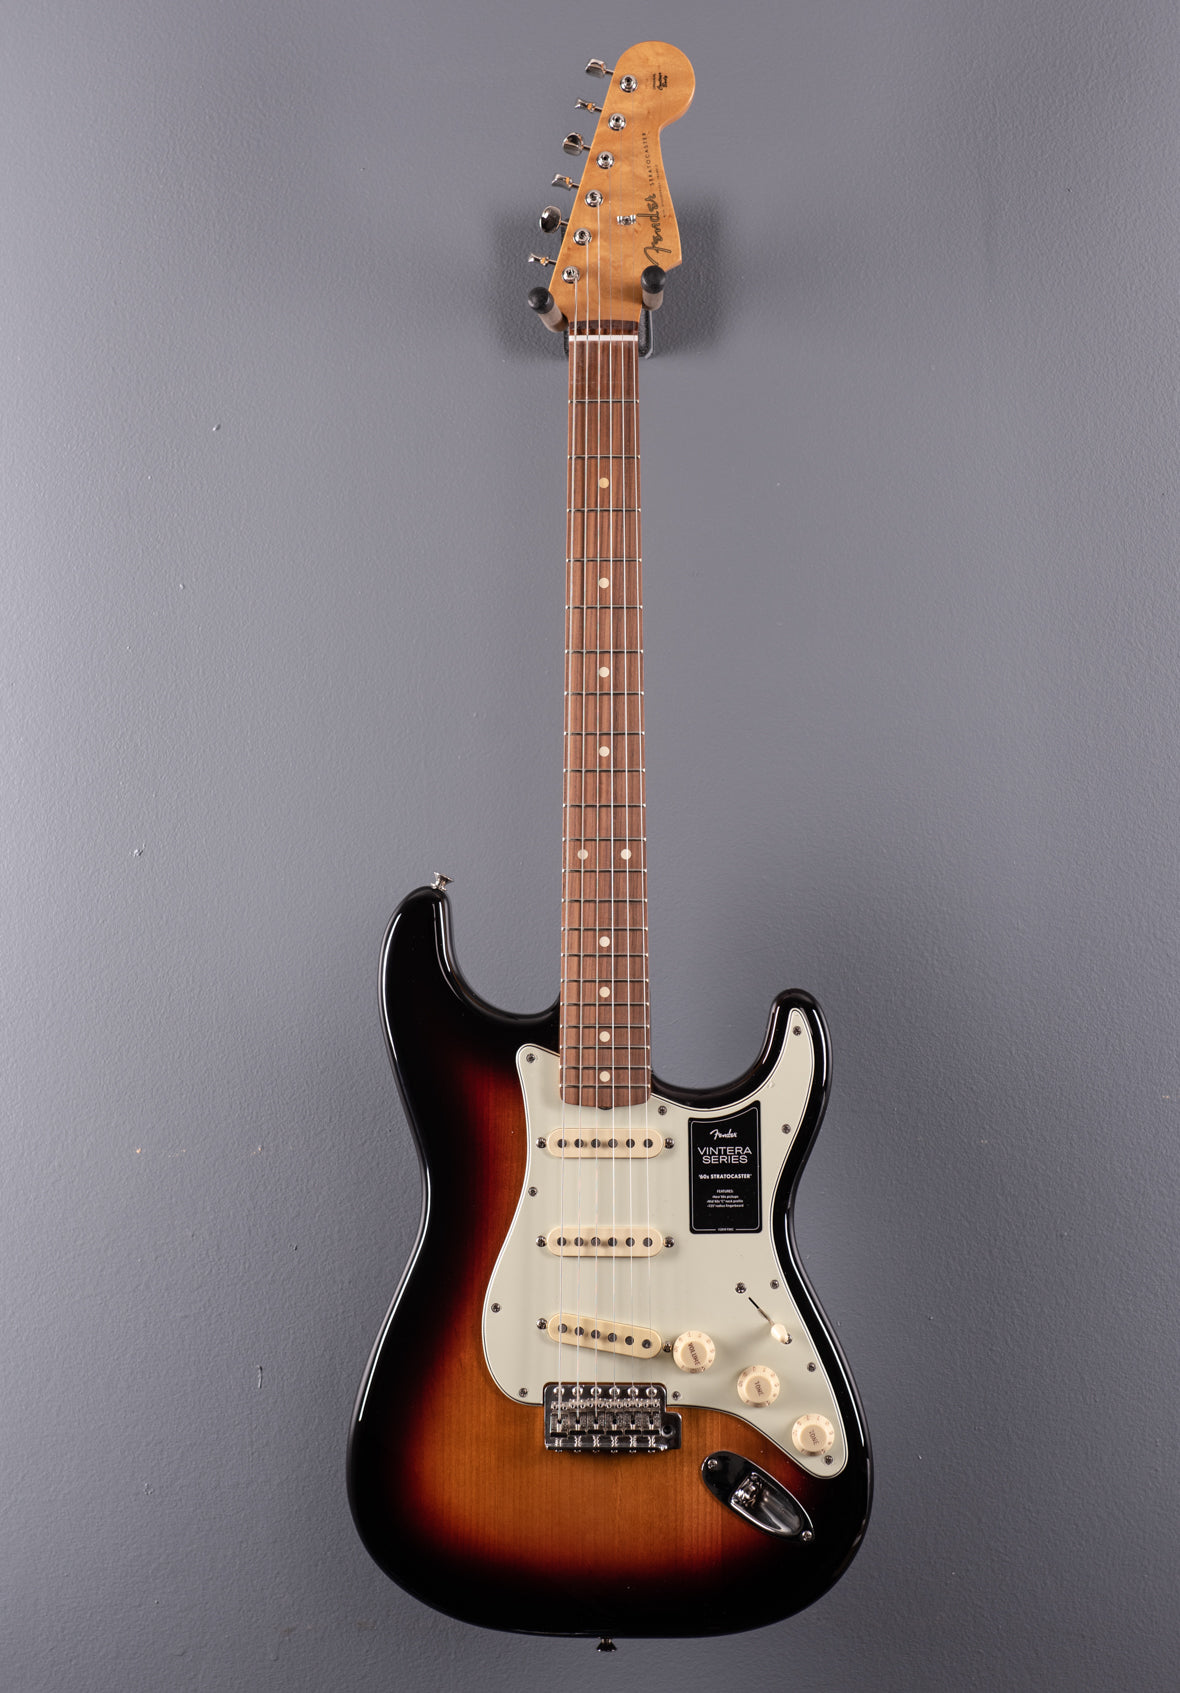 Vintera 60’s Stratocaster – 3 Color Sunburst